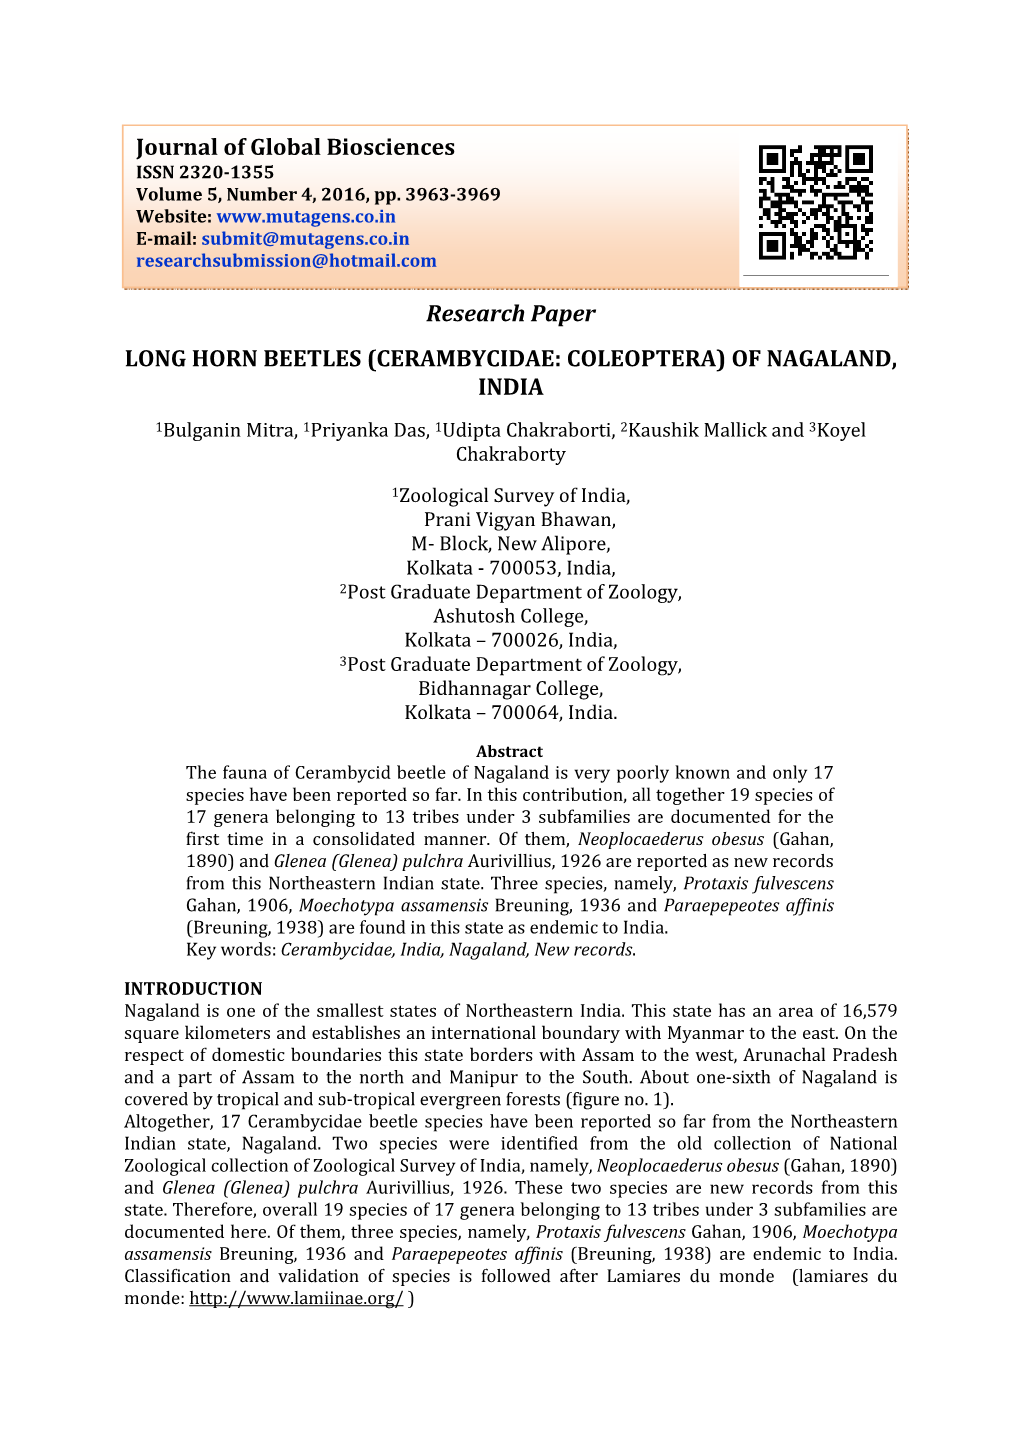 Research Paper LONG HORN BEETLES (CERAMBYCIDAE